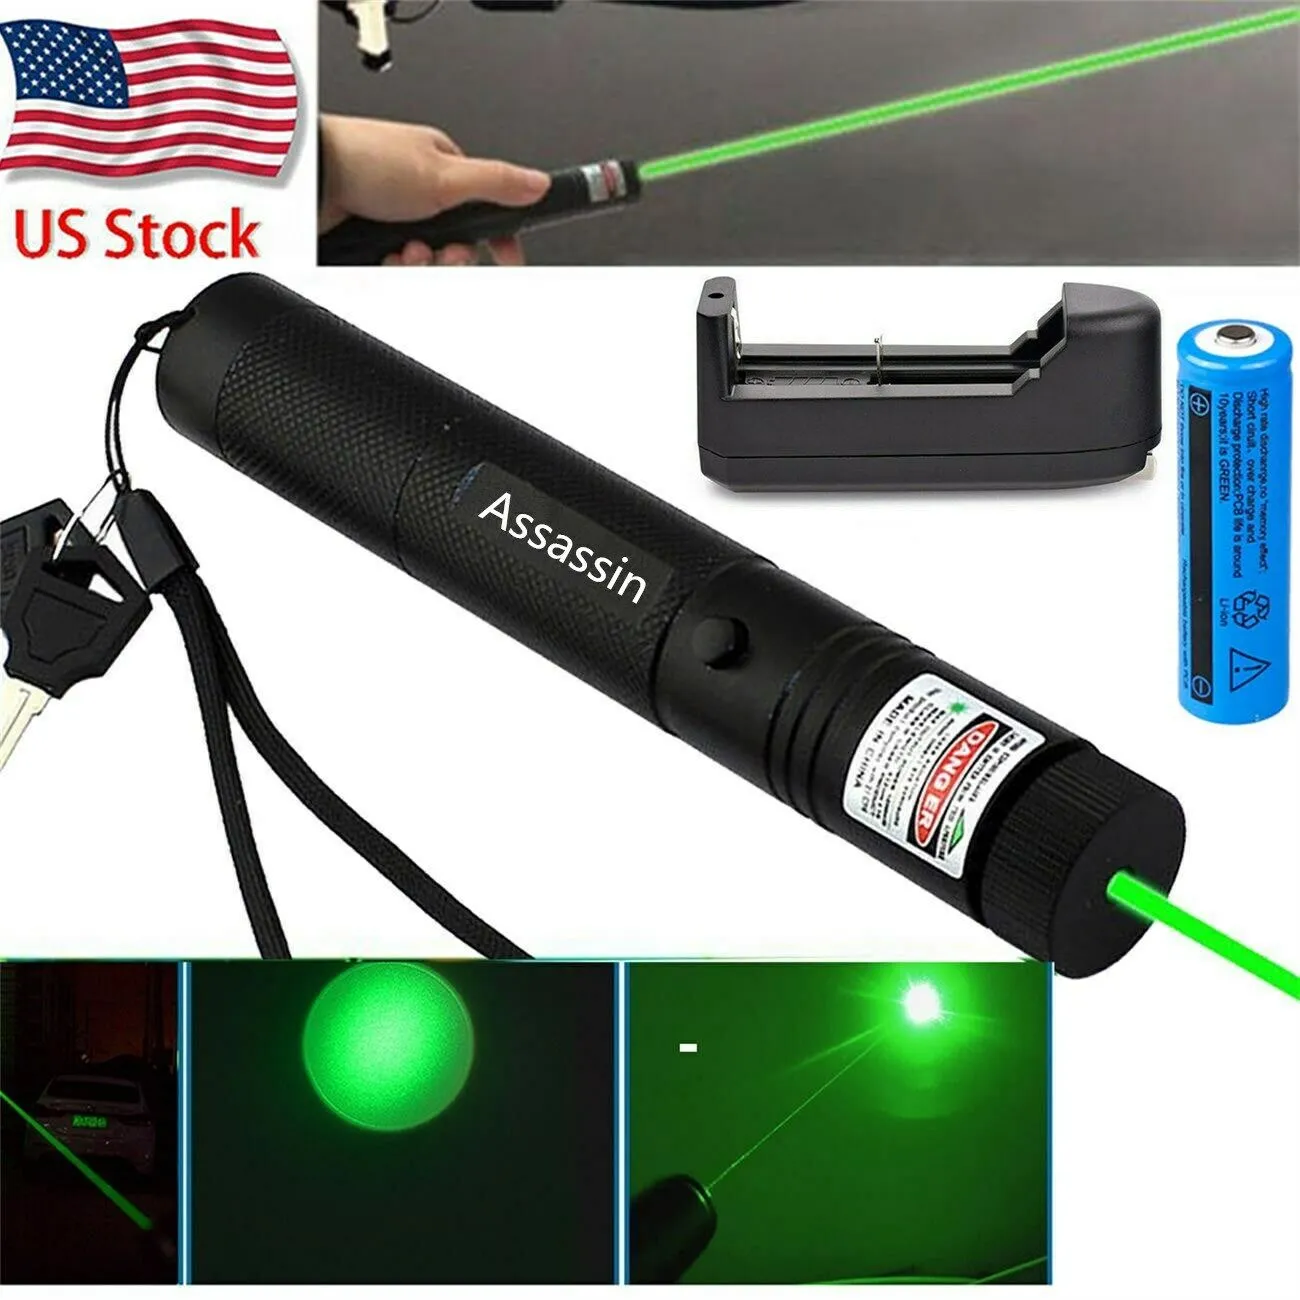 Astronomi Undervisning Fokus Burning Kraftfull Grön Laser Penpekare 1mw 532nm Synlig Beam Cat Toy Military Green Laser + 18650 Batteri + Laddare